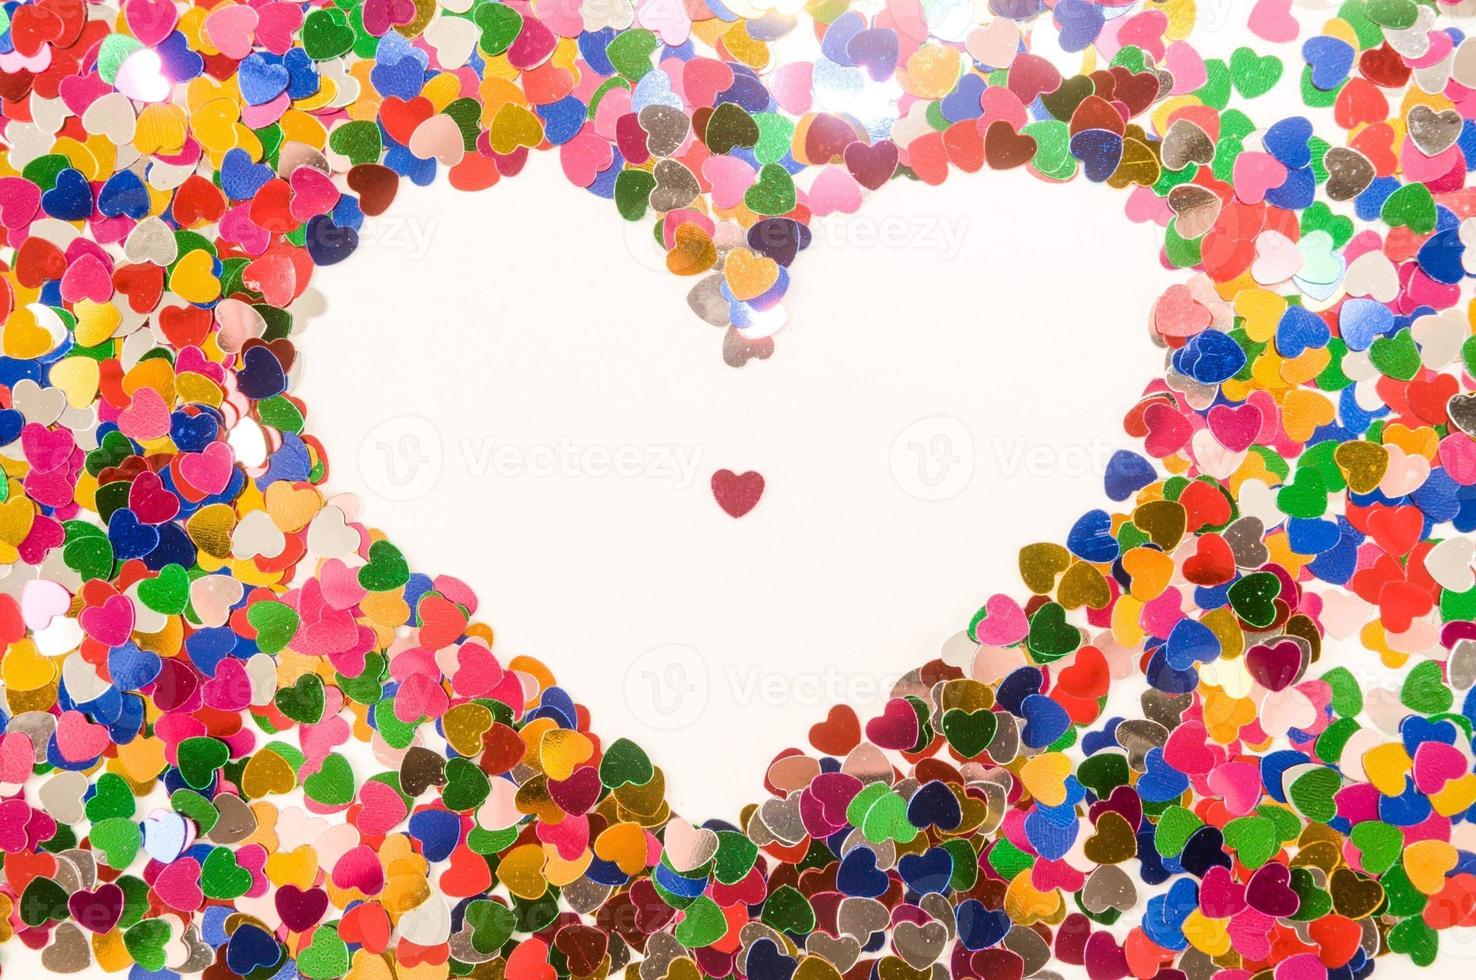 Colorful heart shape photo